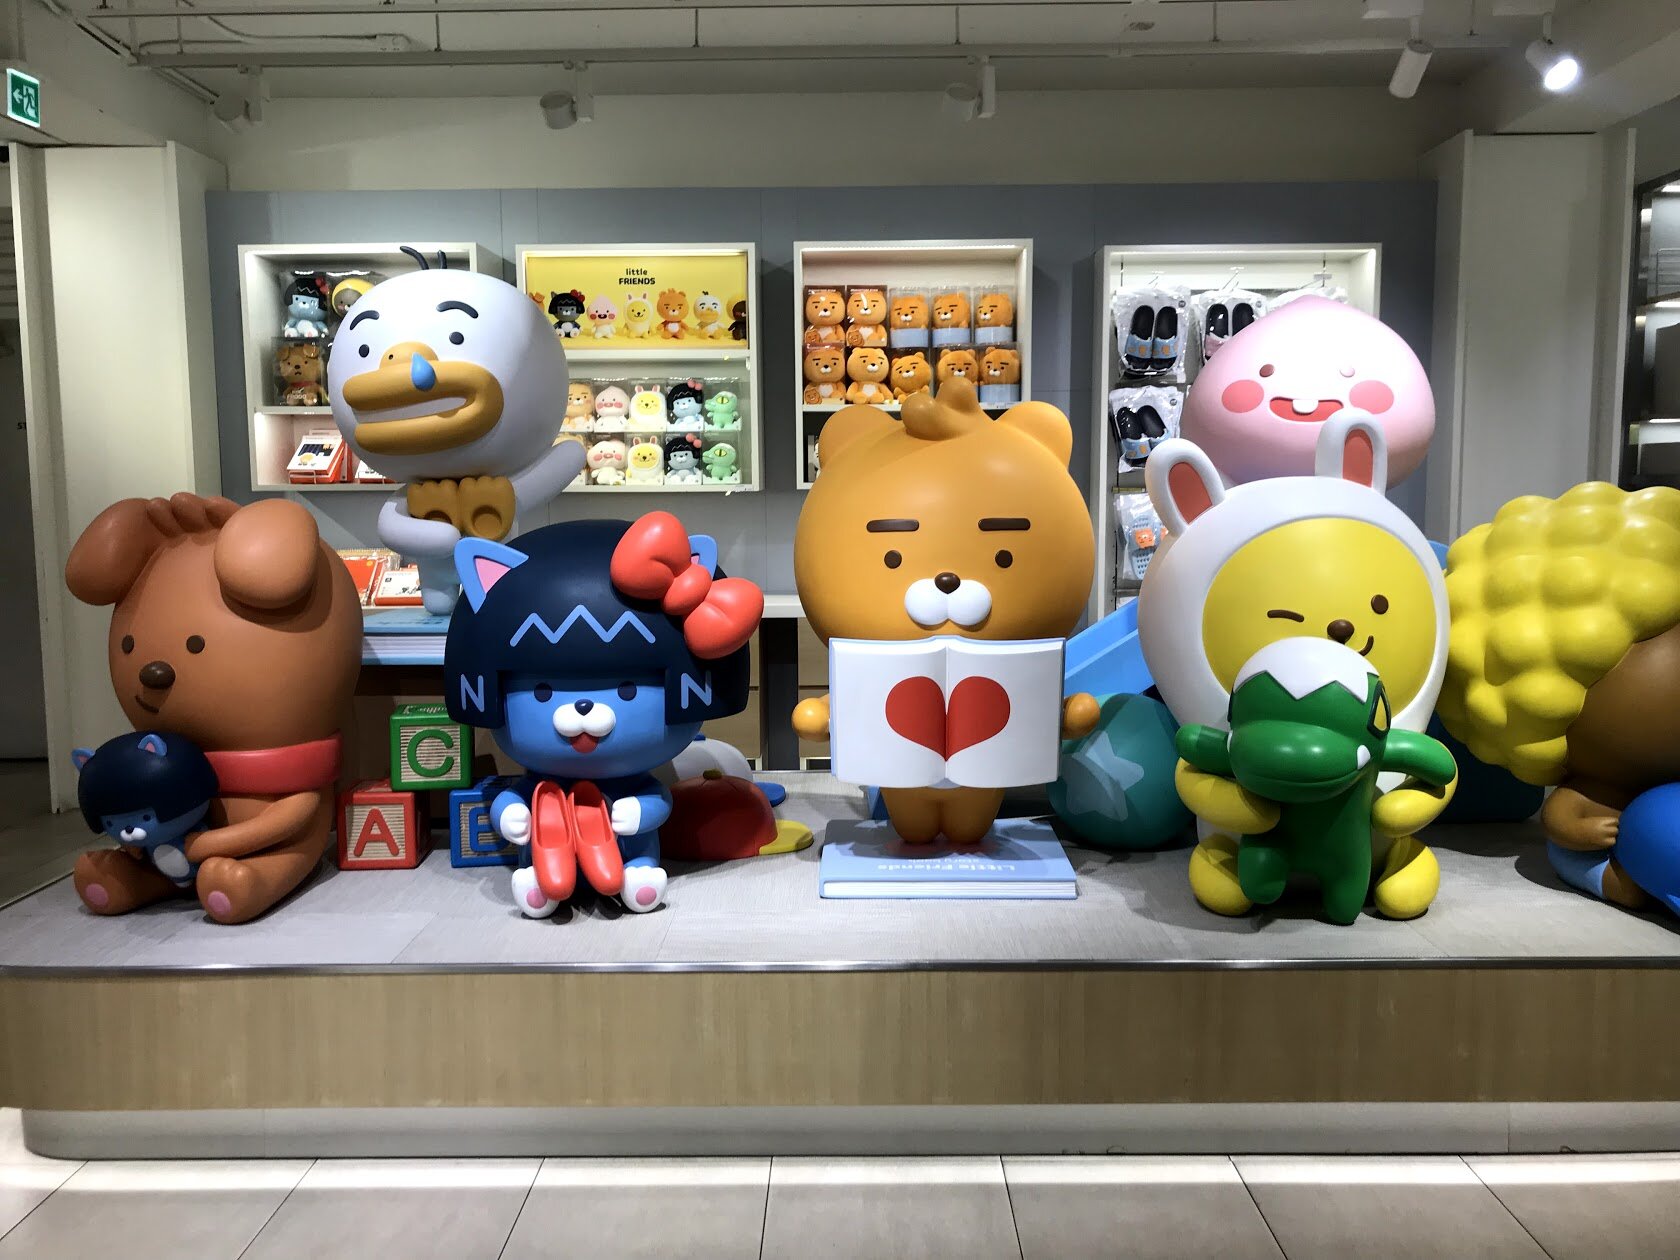 Kakao Friends Store in Seoul, South Korea